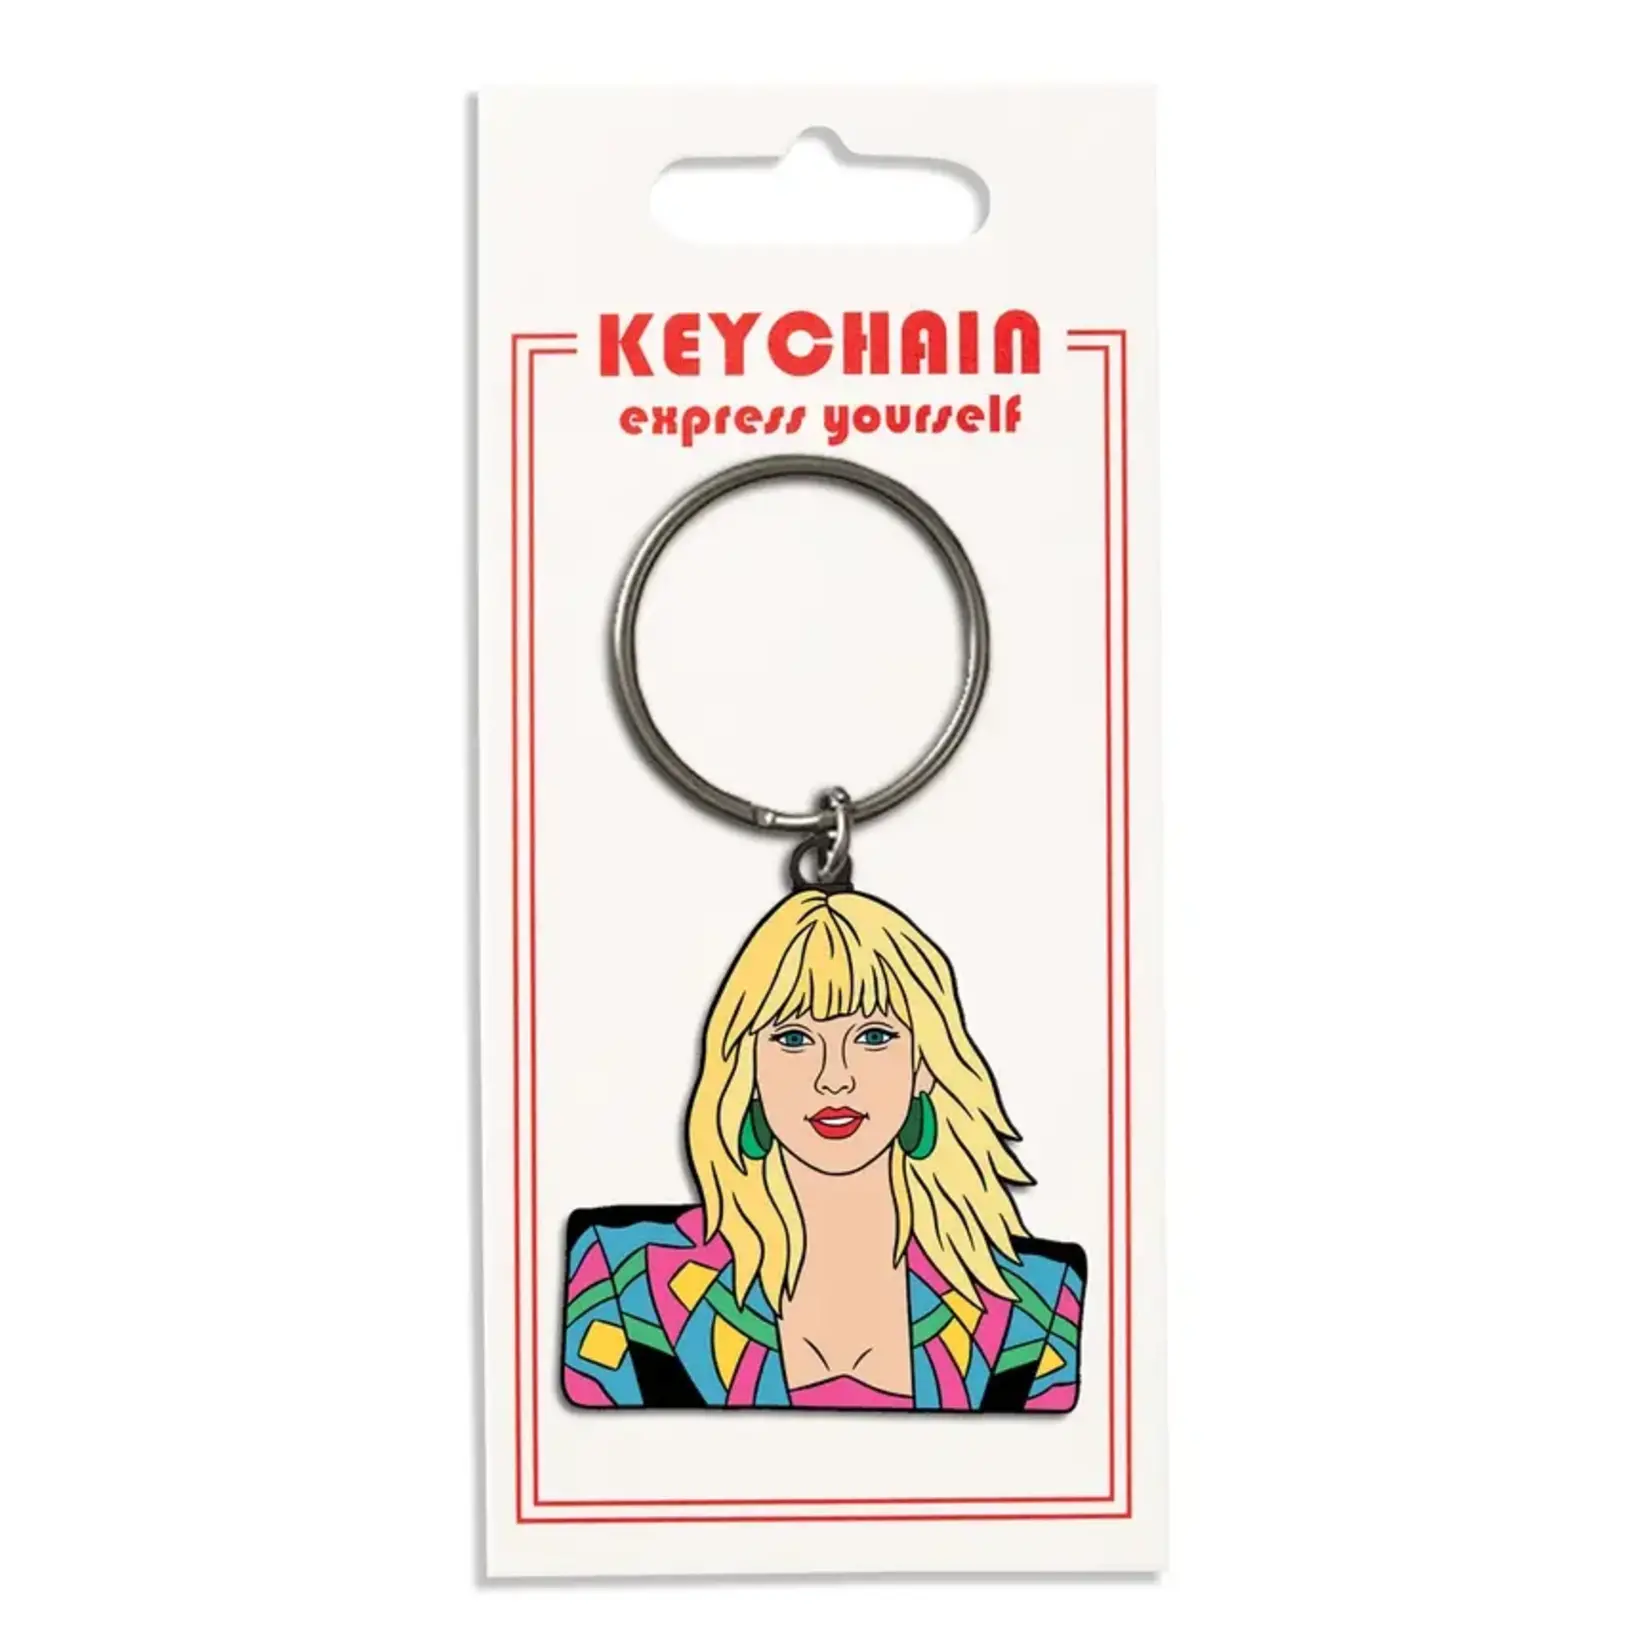 The Found Taylor Keychain